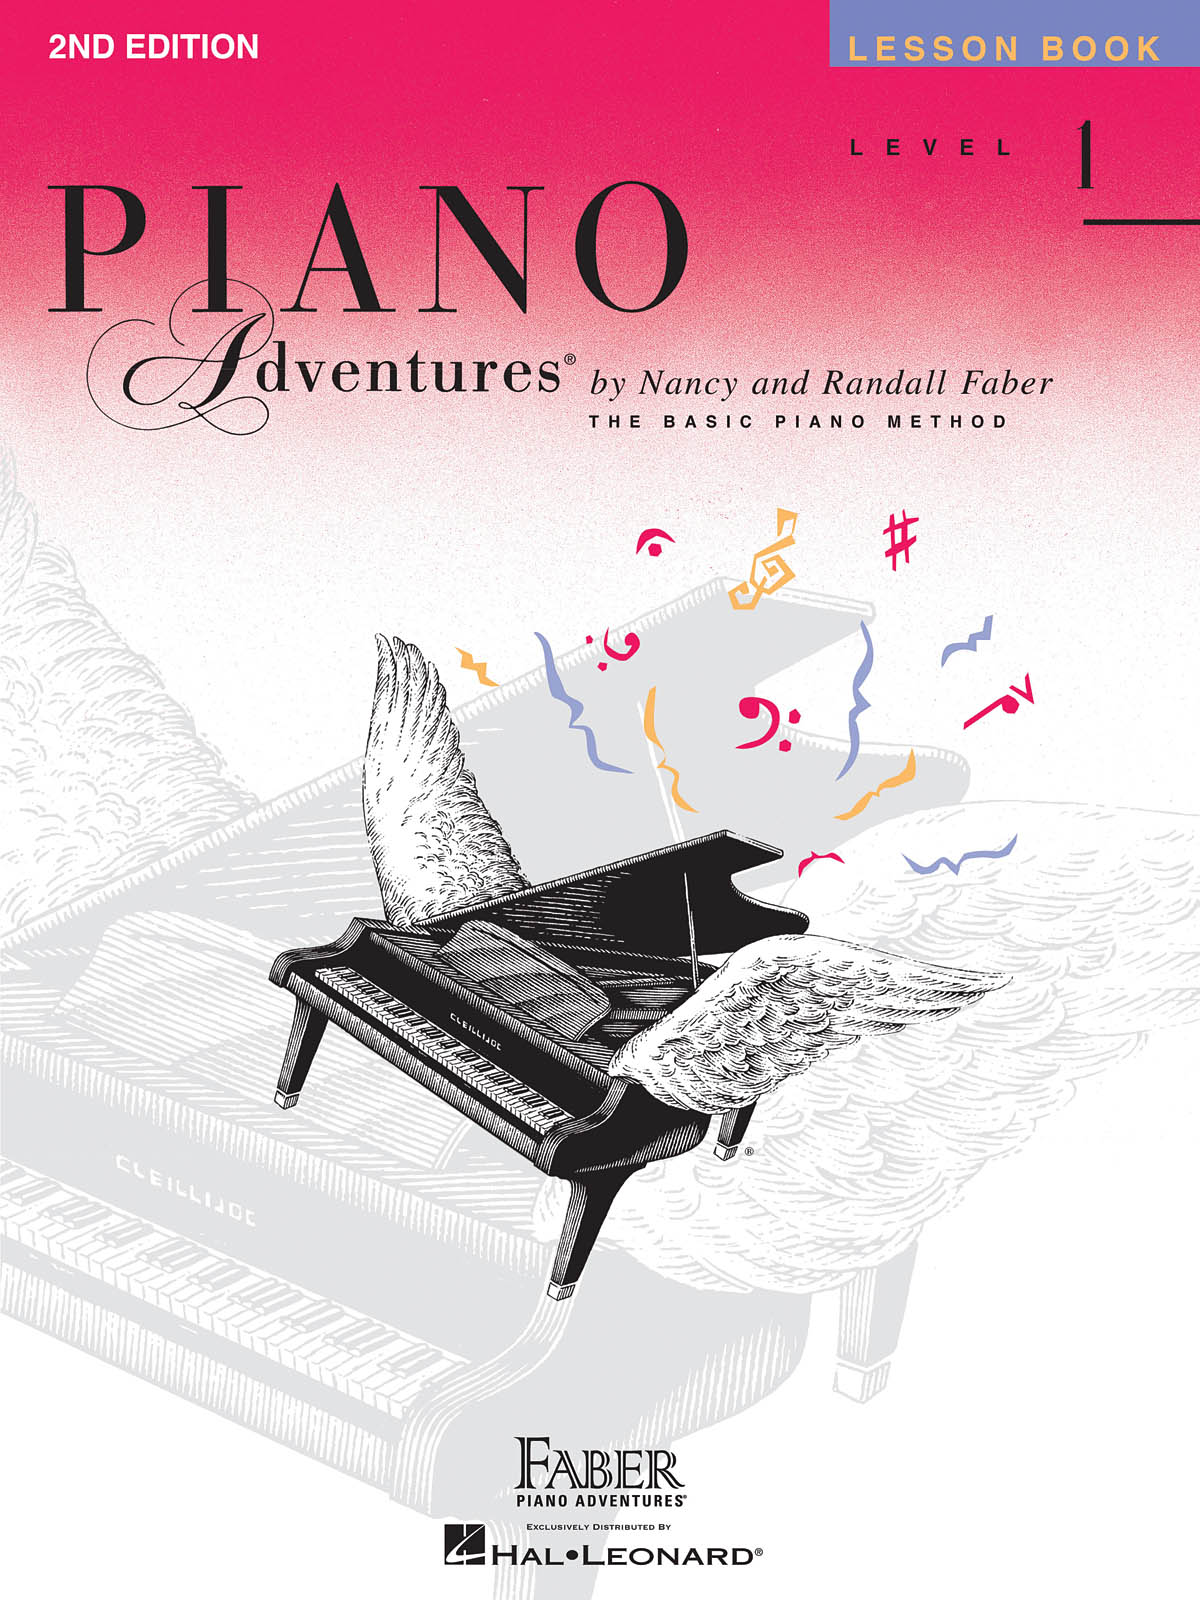 HAL LEONARD FABER PIANO ADVENTURES LESSON BOOK 1